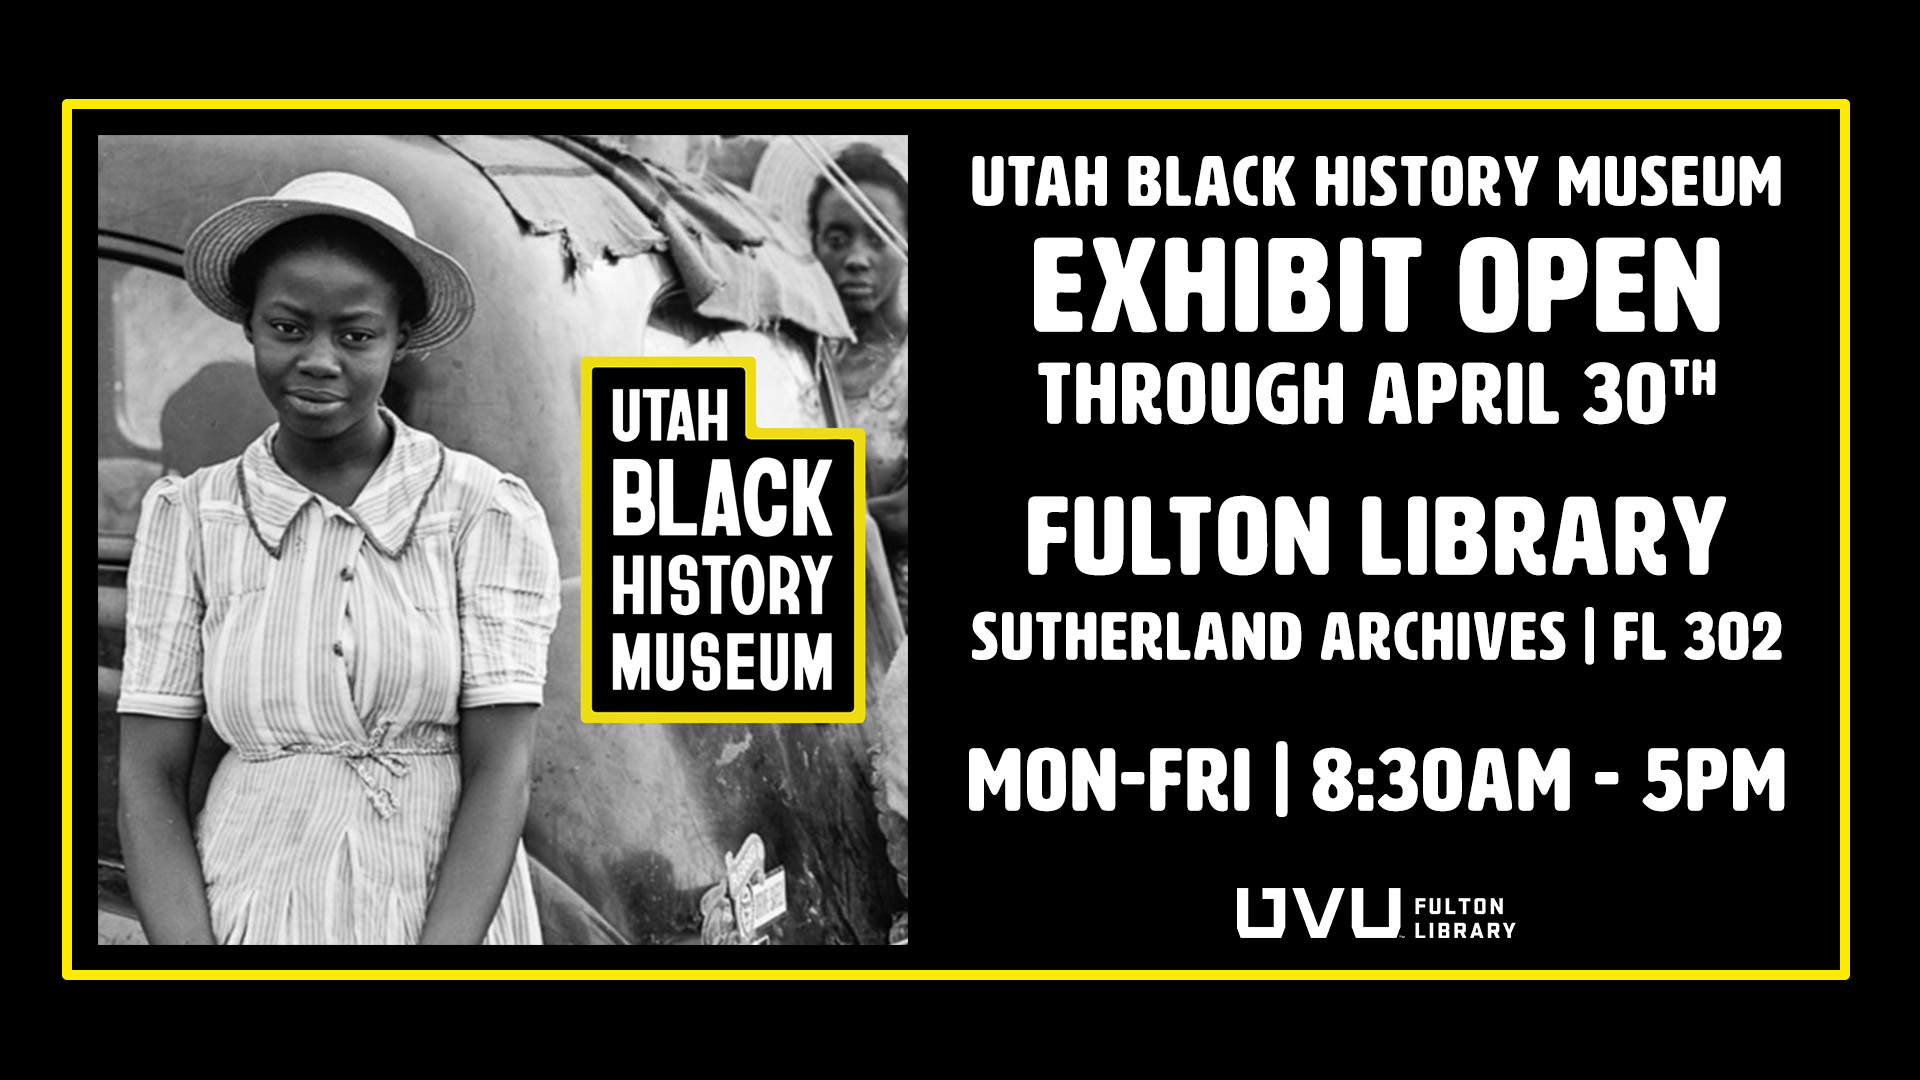 Utah Black History Museum exhibit open through April 30th. Fulton Library, Sutherland Archives | FL 302, Mon-Fri | 8:30 AM - 5 PM 